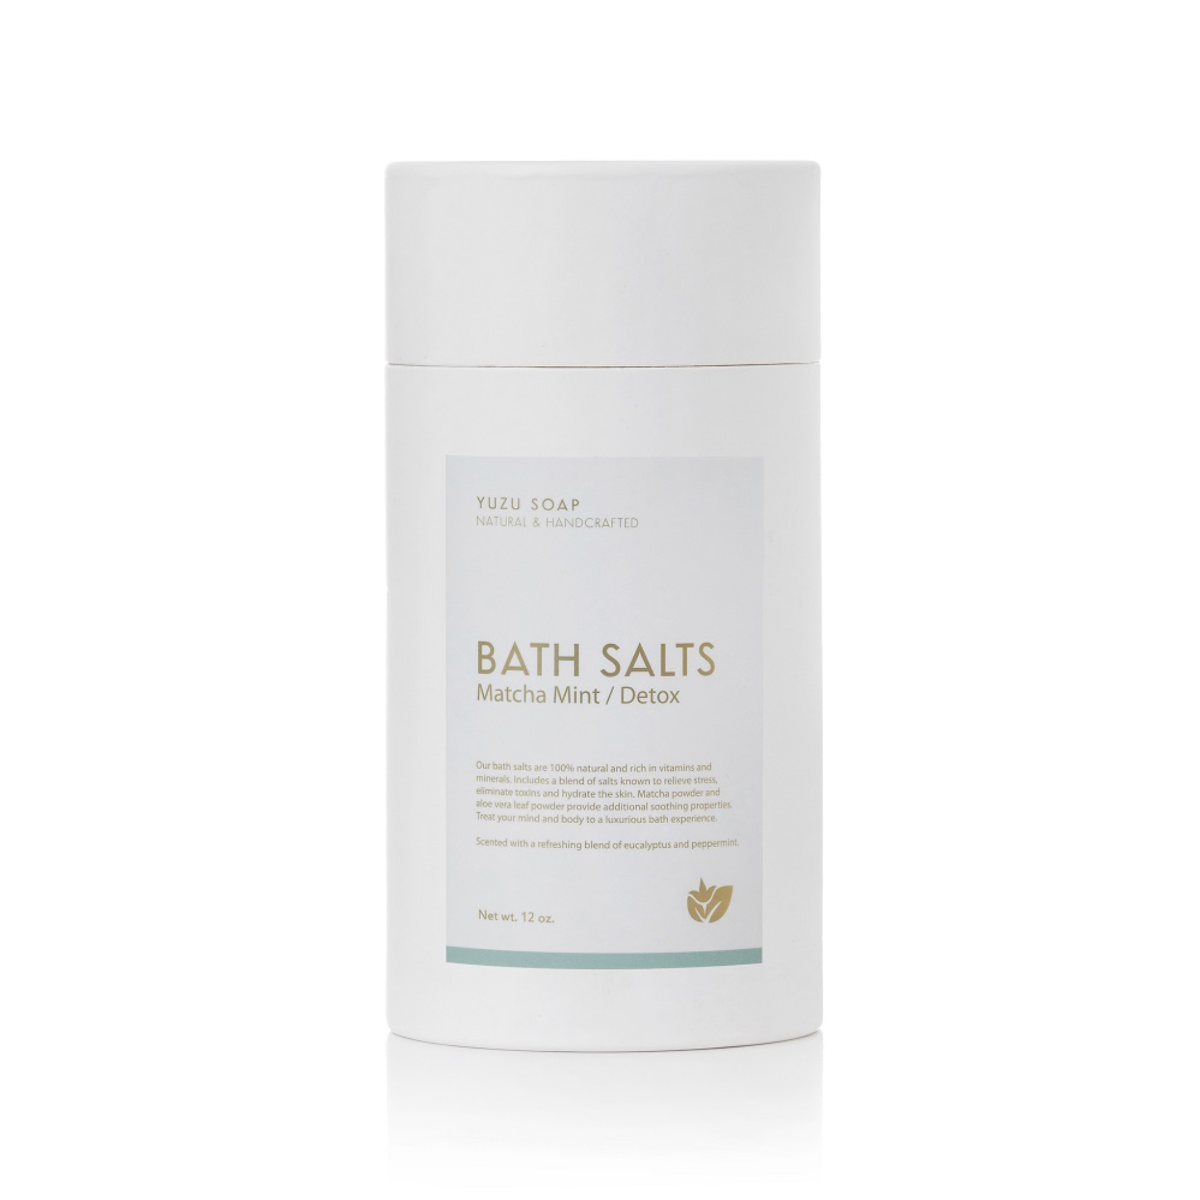 YUZU SOAP - Bath SALTS - MATCHA MINT